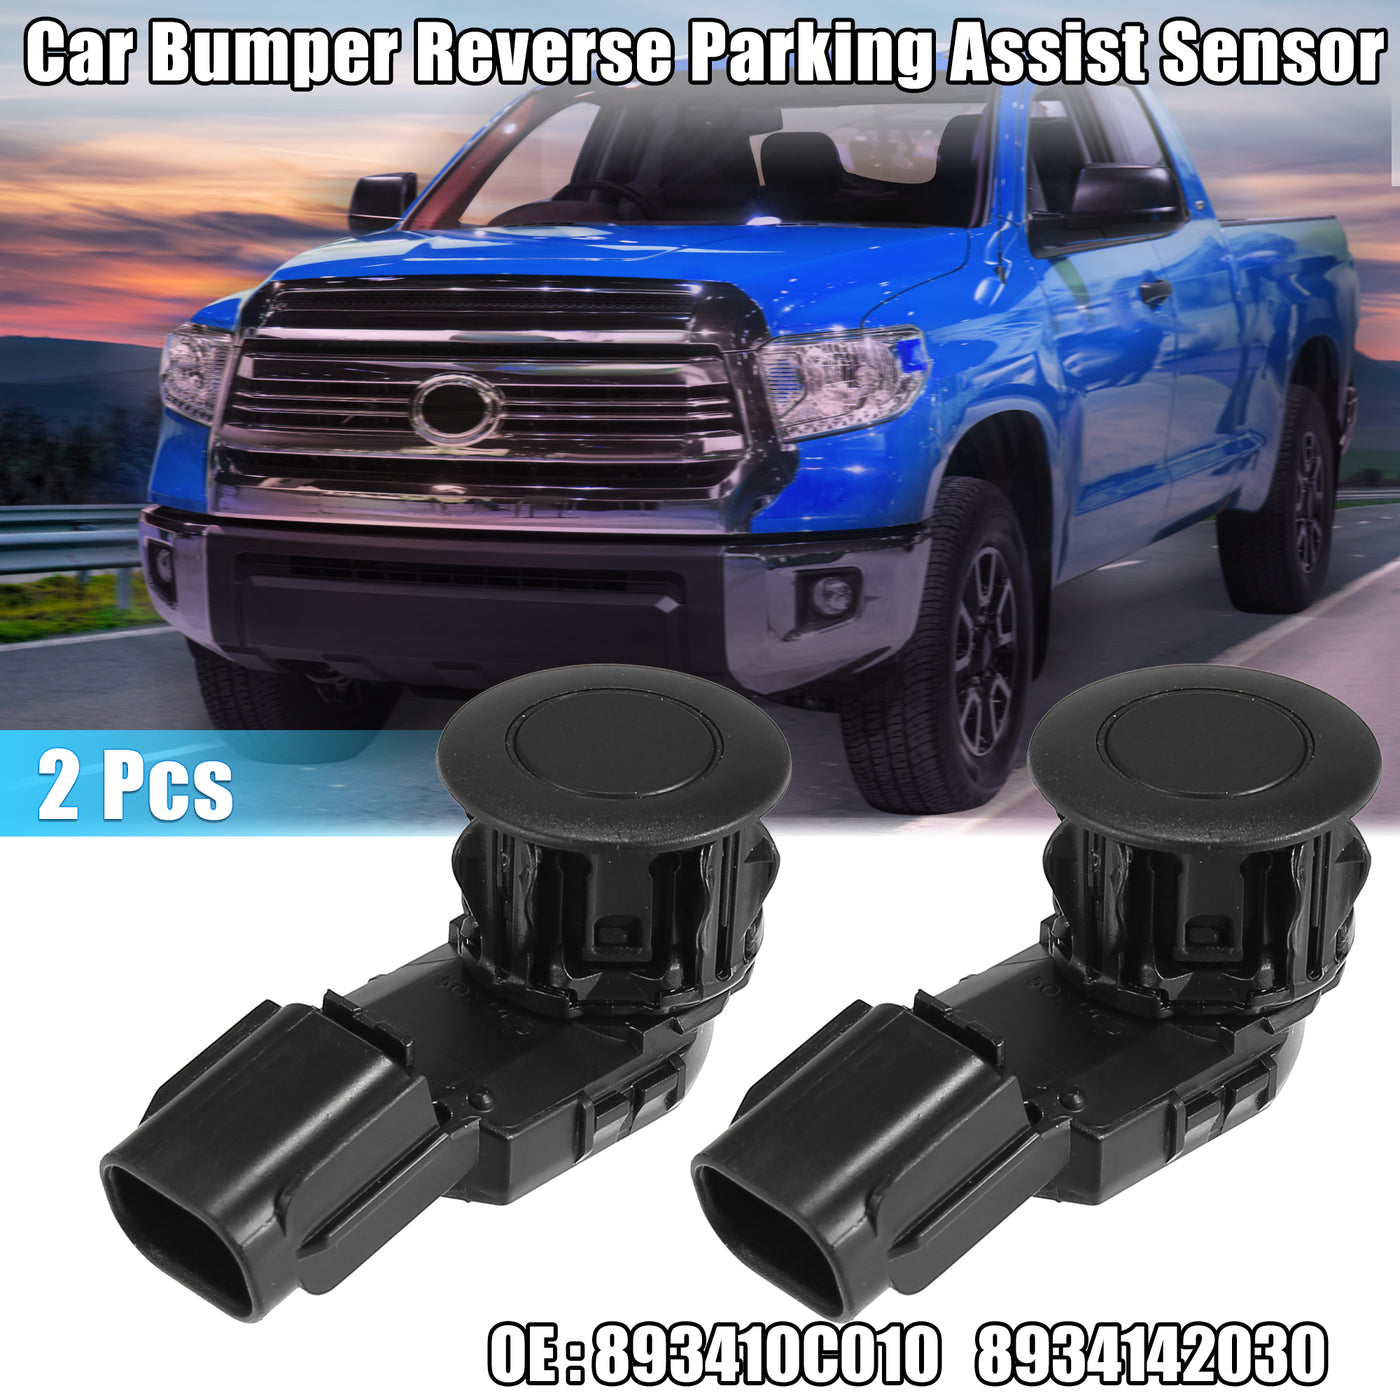 X AUTOHAUX 2 Pcs Car Bumper Reverse Parking Assist Sensor for Toyota RAV4 2016-2018 for Toyota Tundra 2014-2018 893410C010 8934142030 893410C011